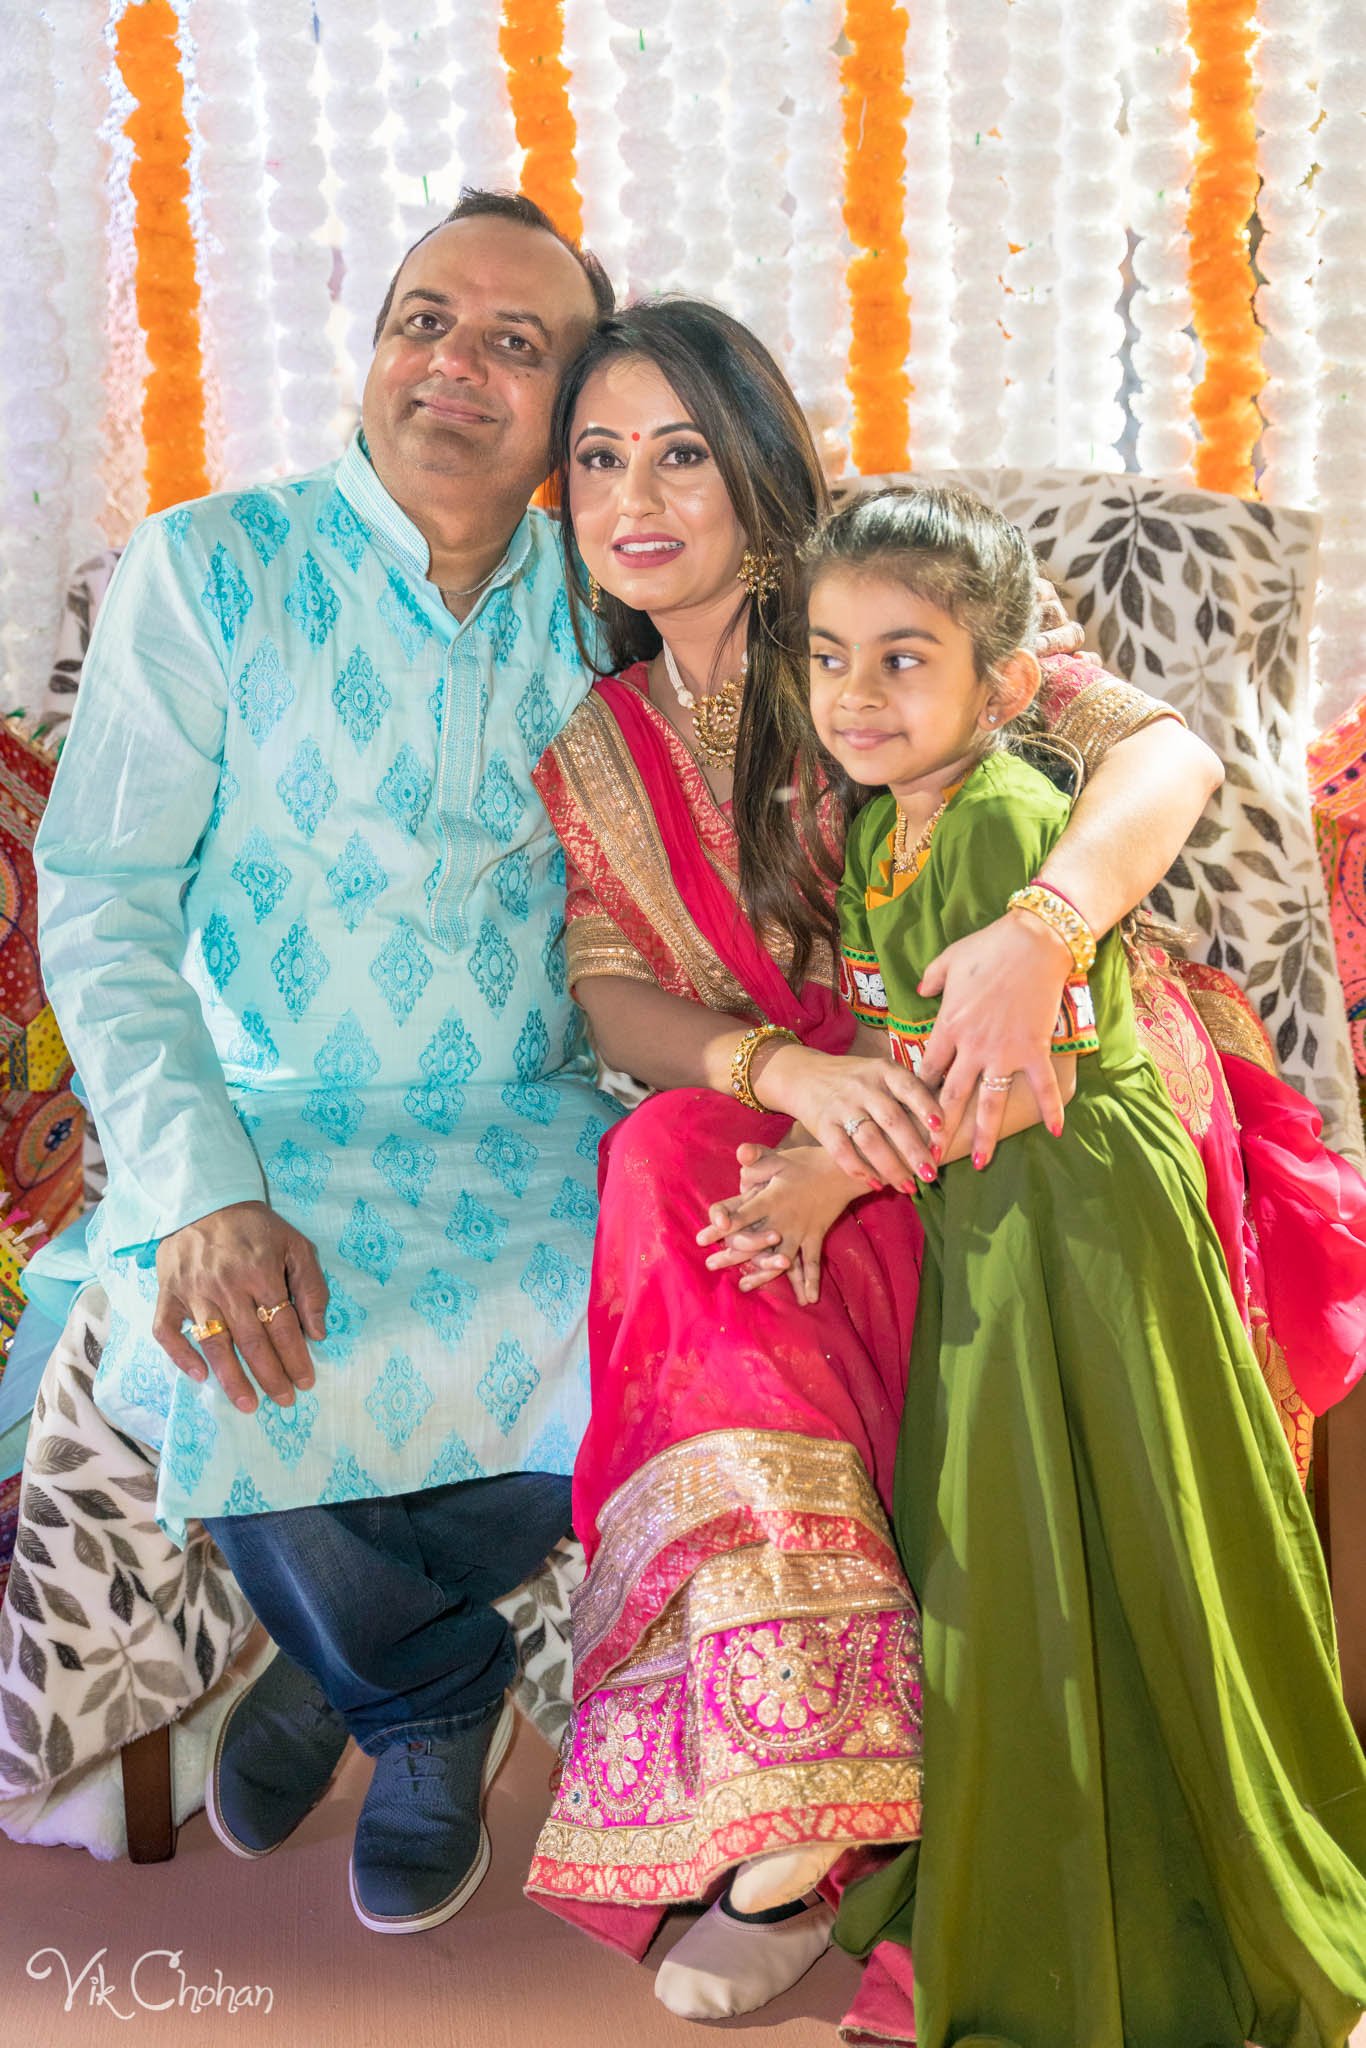 2022-02-04-Hely-&-Parth-Garba-Night-Indian-Wedding-Vik-Chohan-Photography-Photo-Booth-Social-Media-VCP-160.jpg